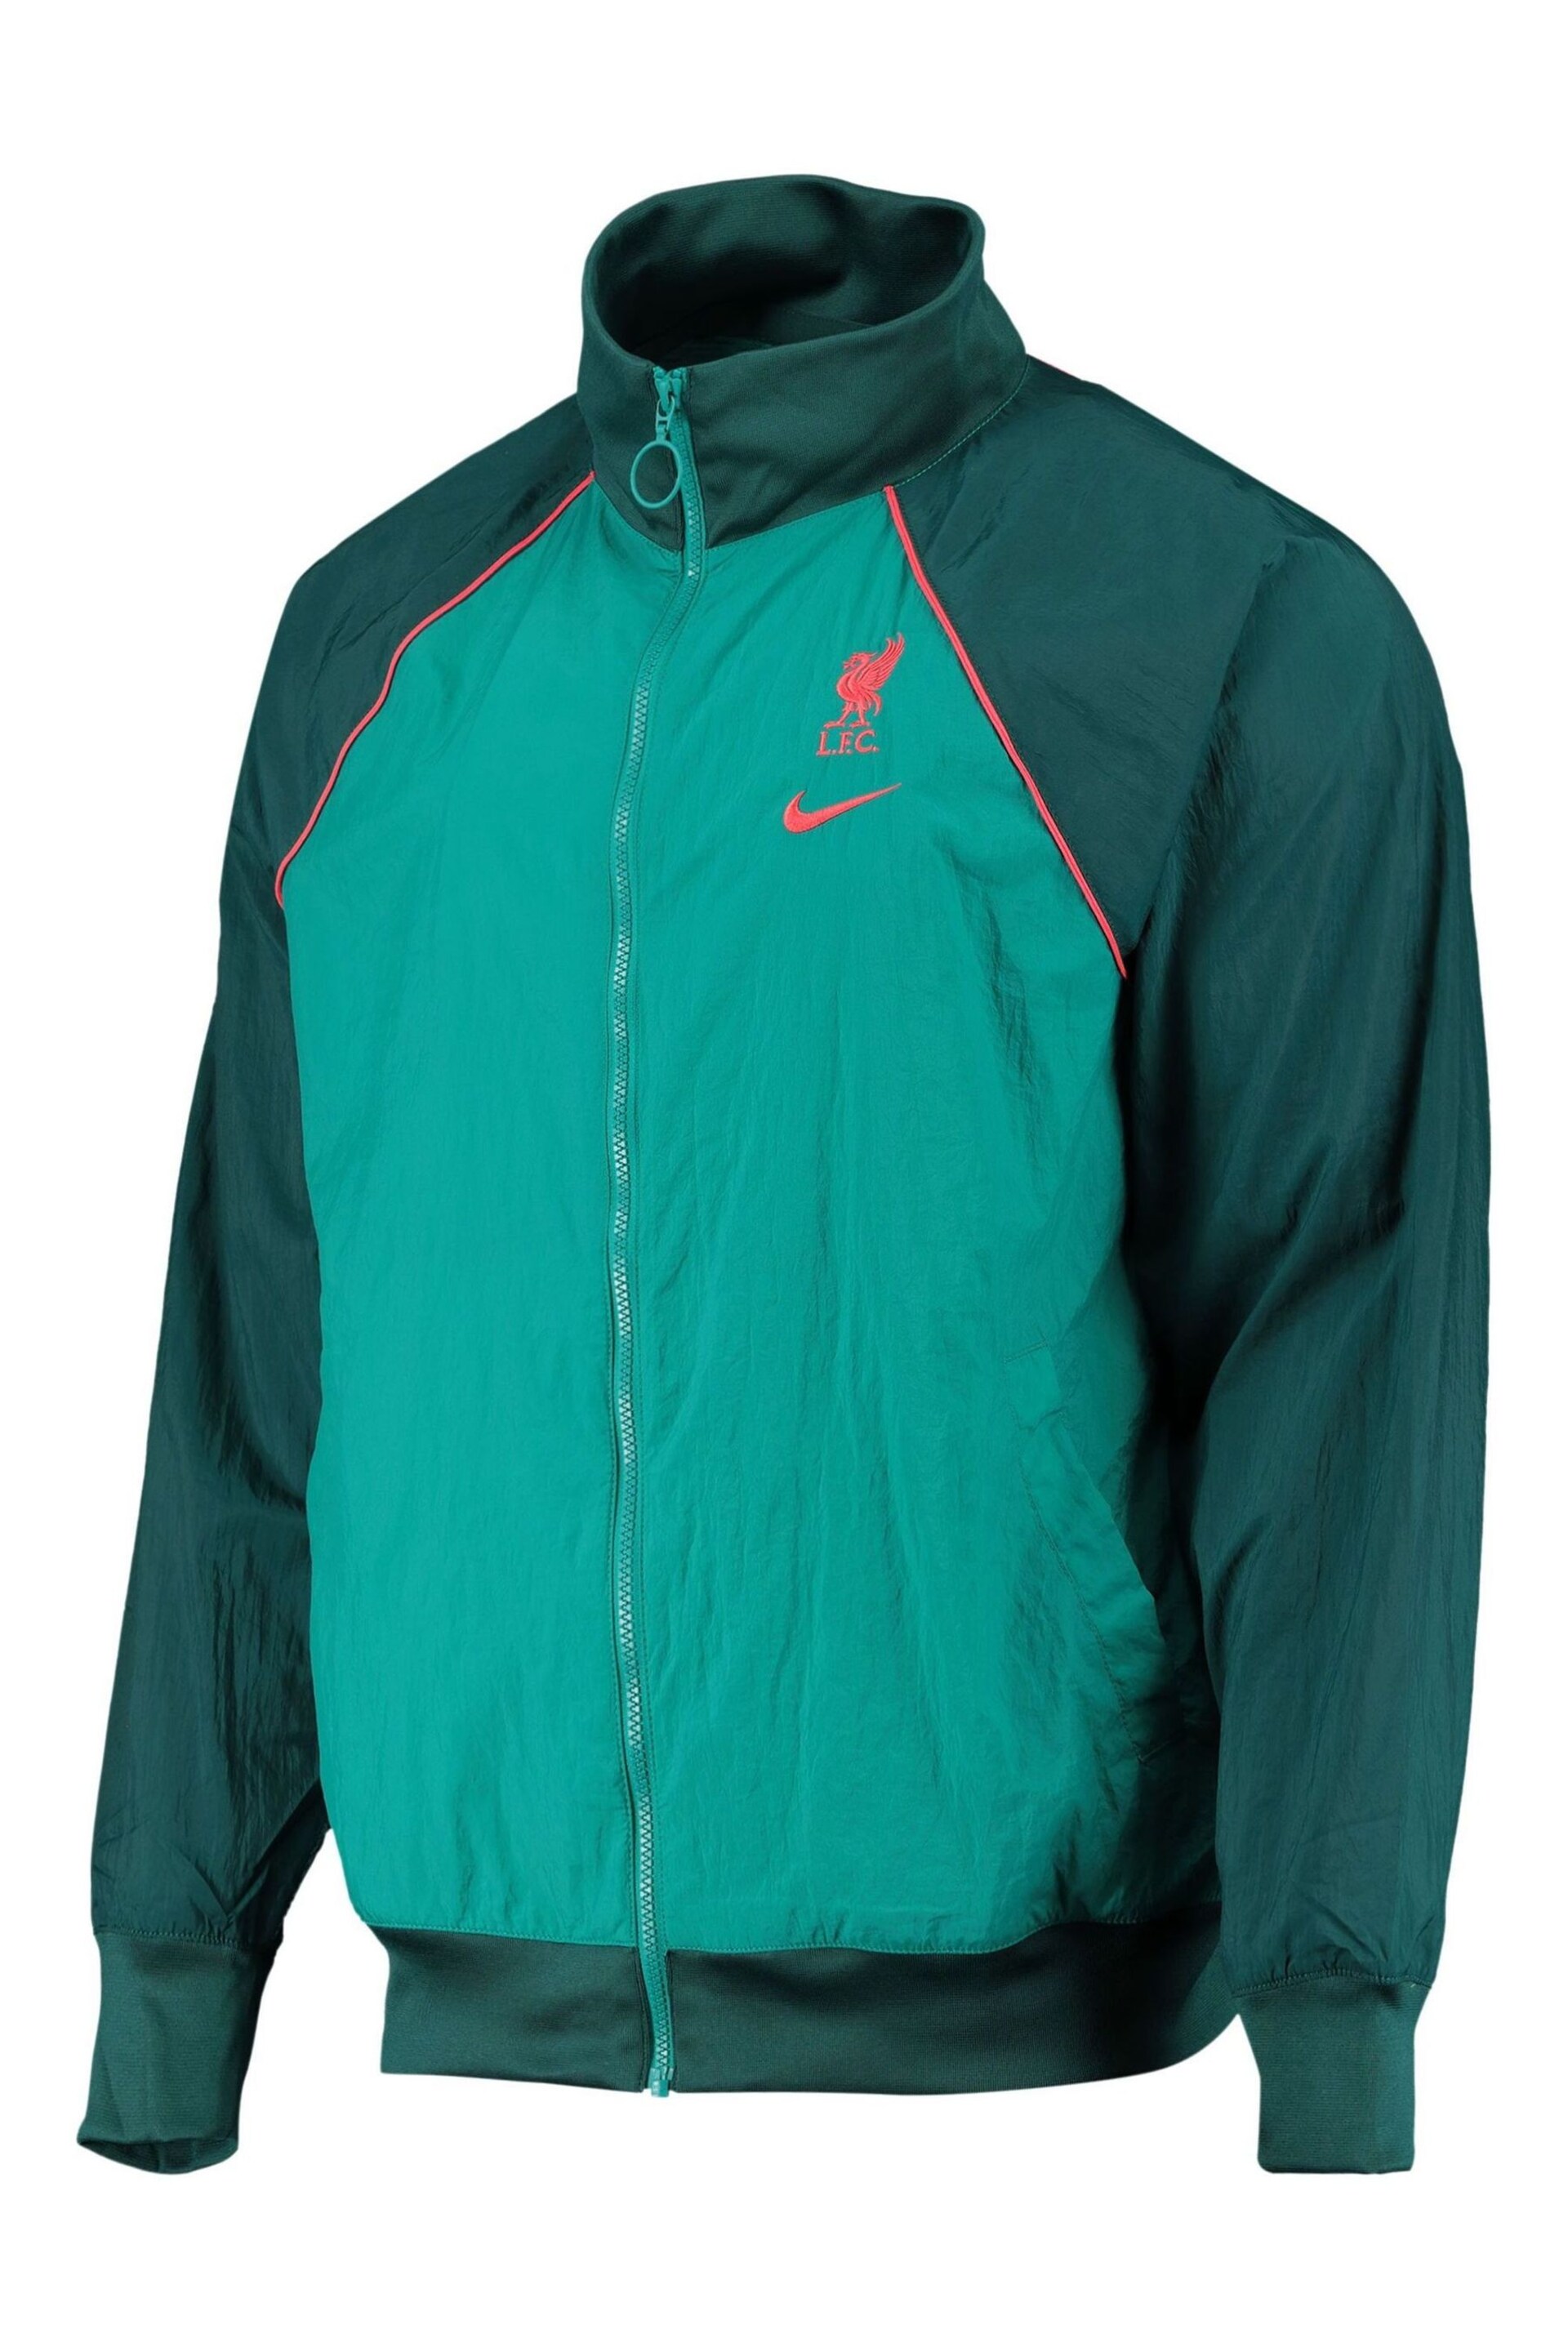 Nike Green Liverpool Tracksuit Jacket - Image 2 of 3